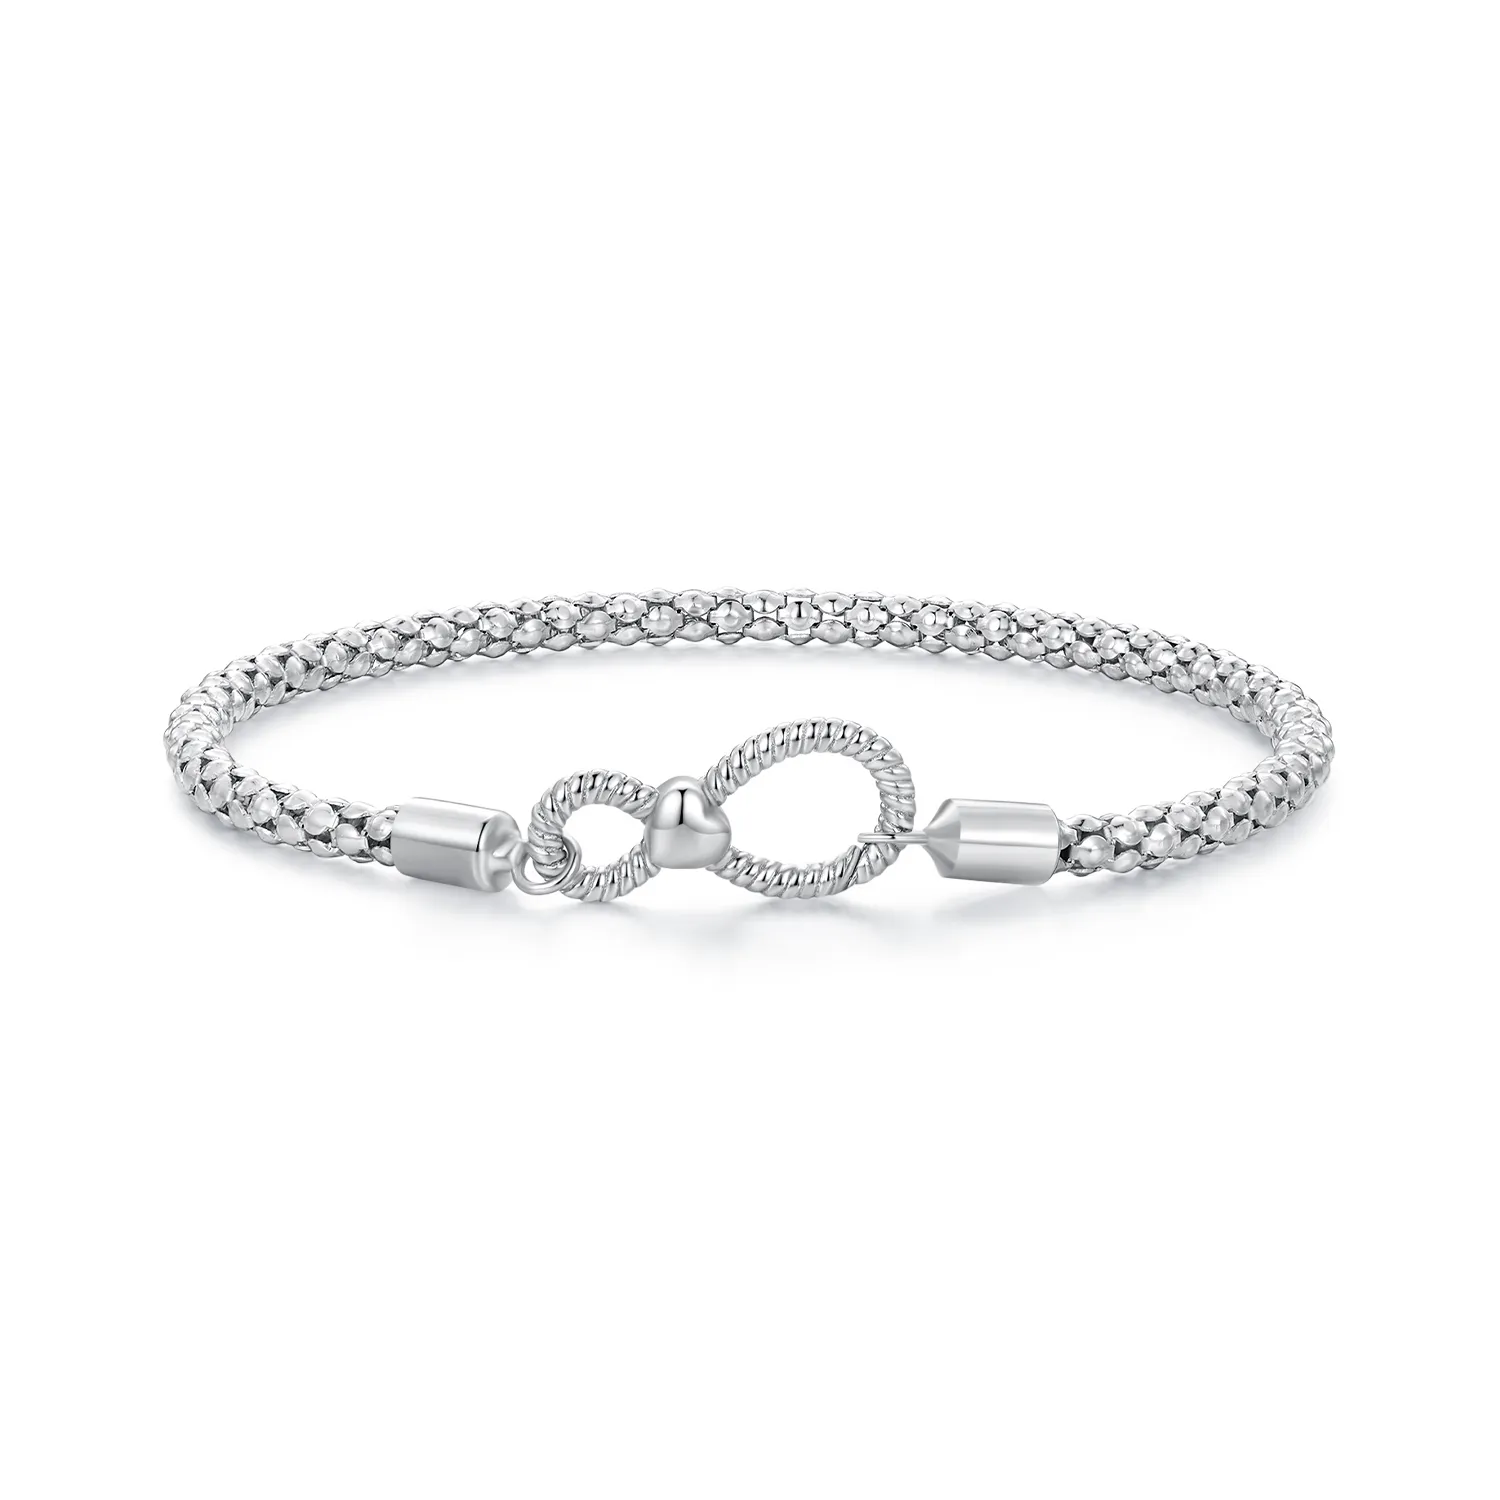 Pandora Style Infinity Basic Chain Bracelet - SCB260